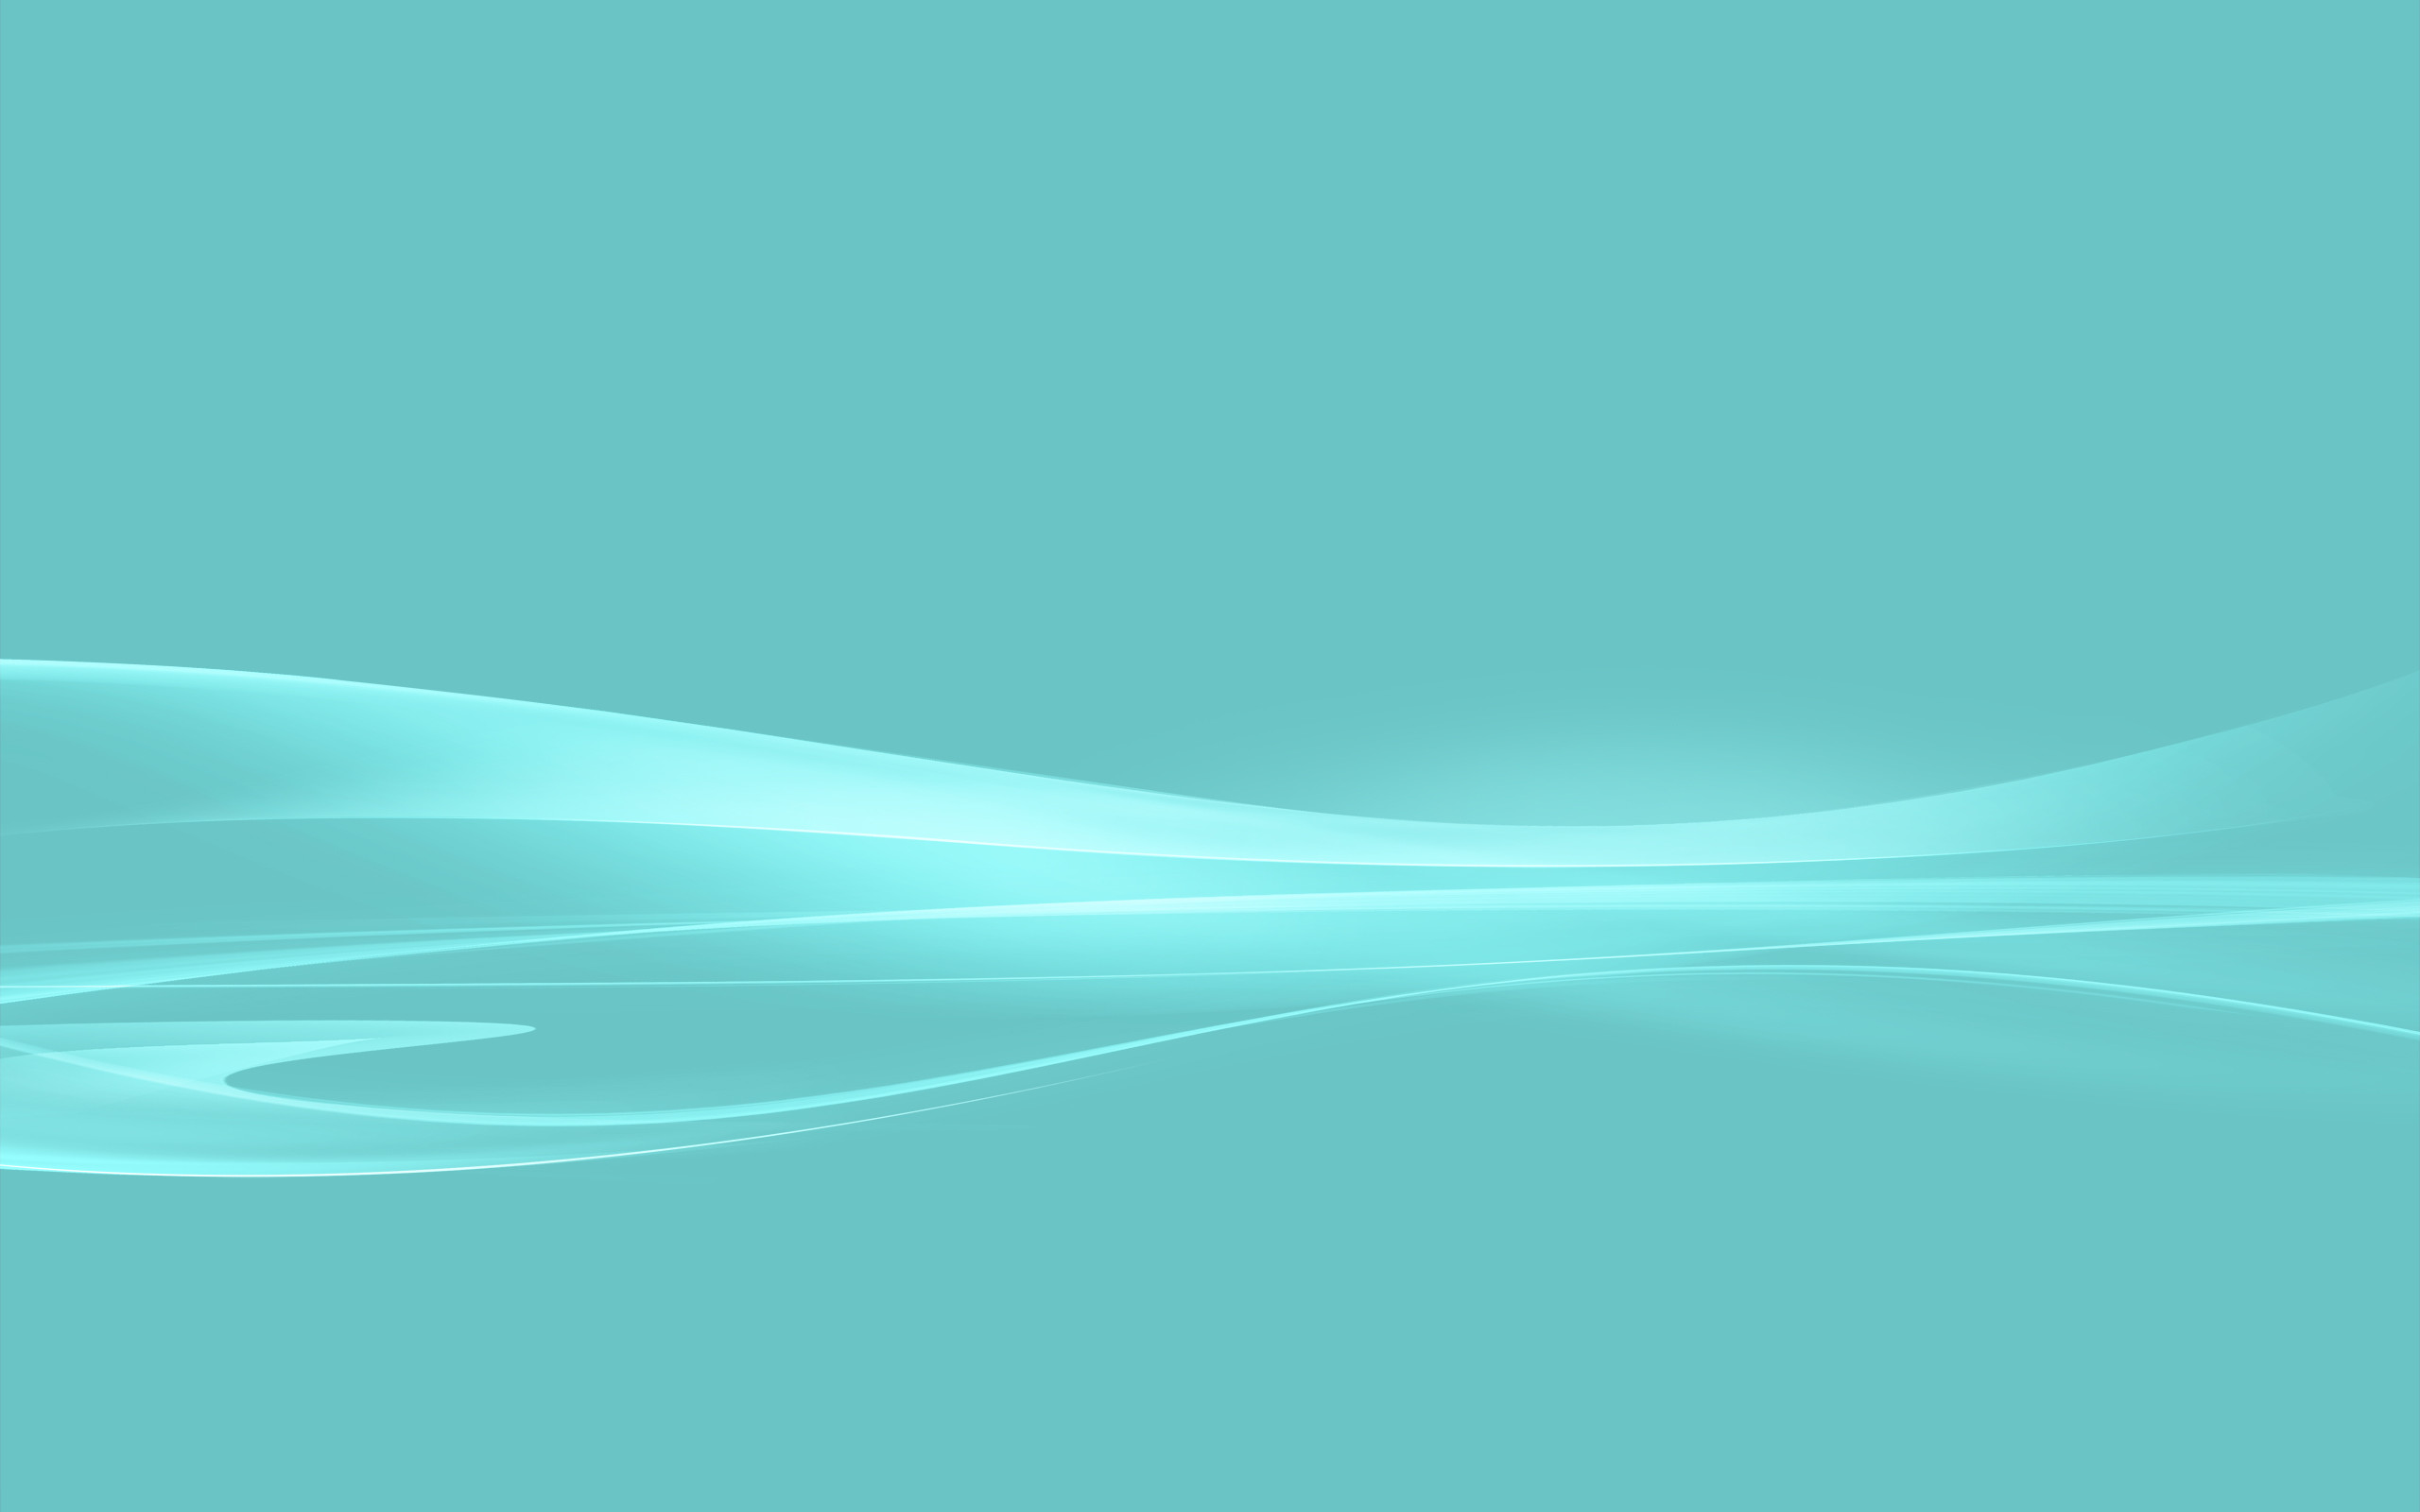 2560x1600 Blue background abstract | Desktop Background | Pinterest | Blue backgrounds